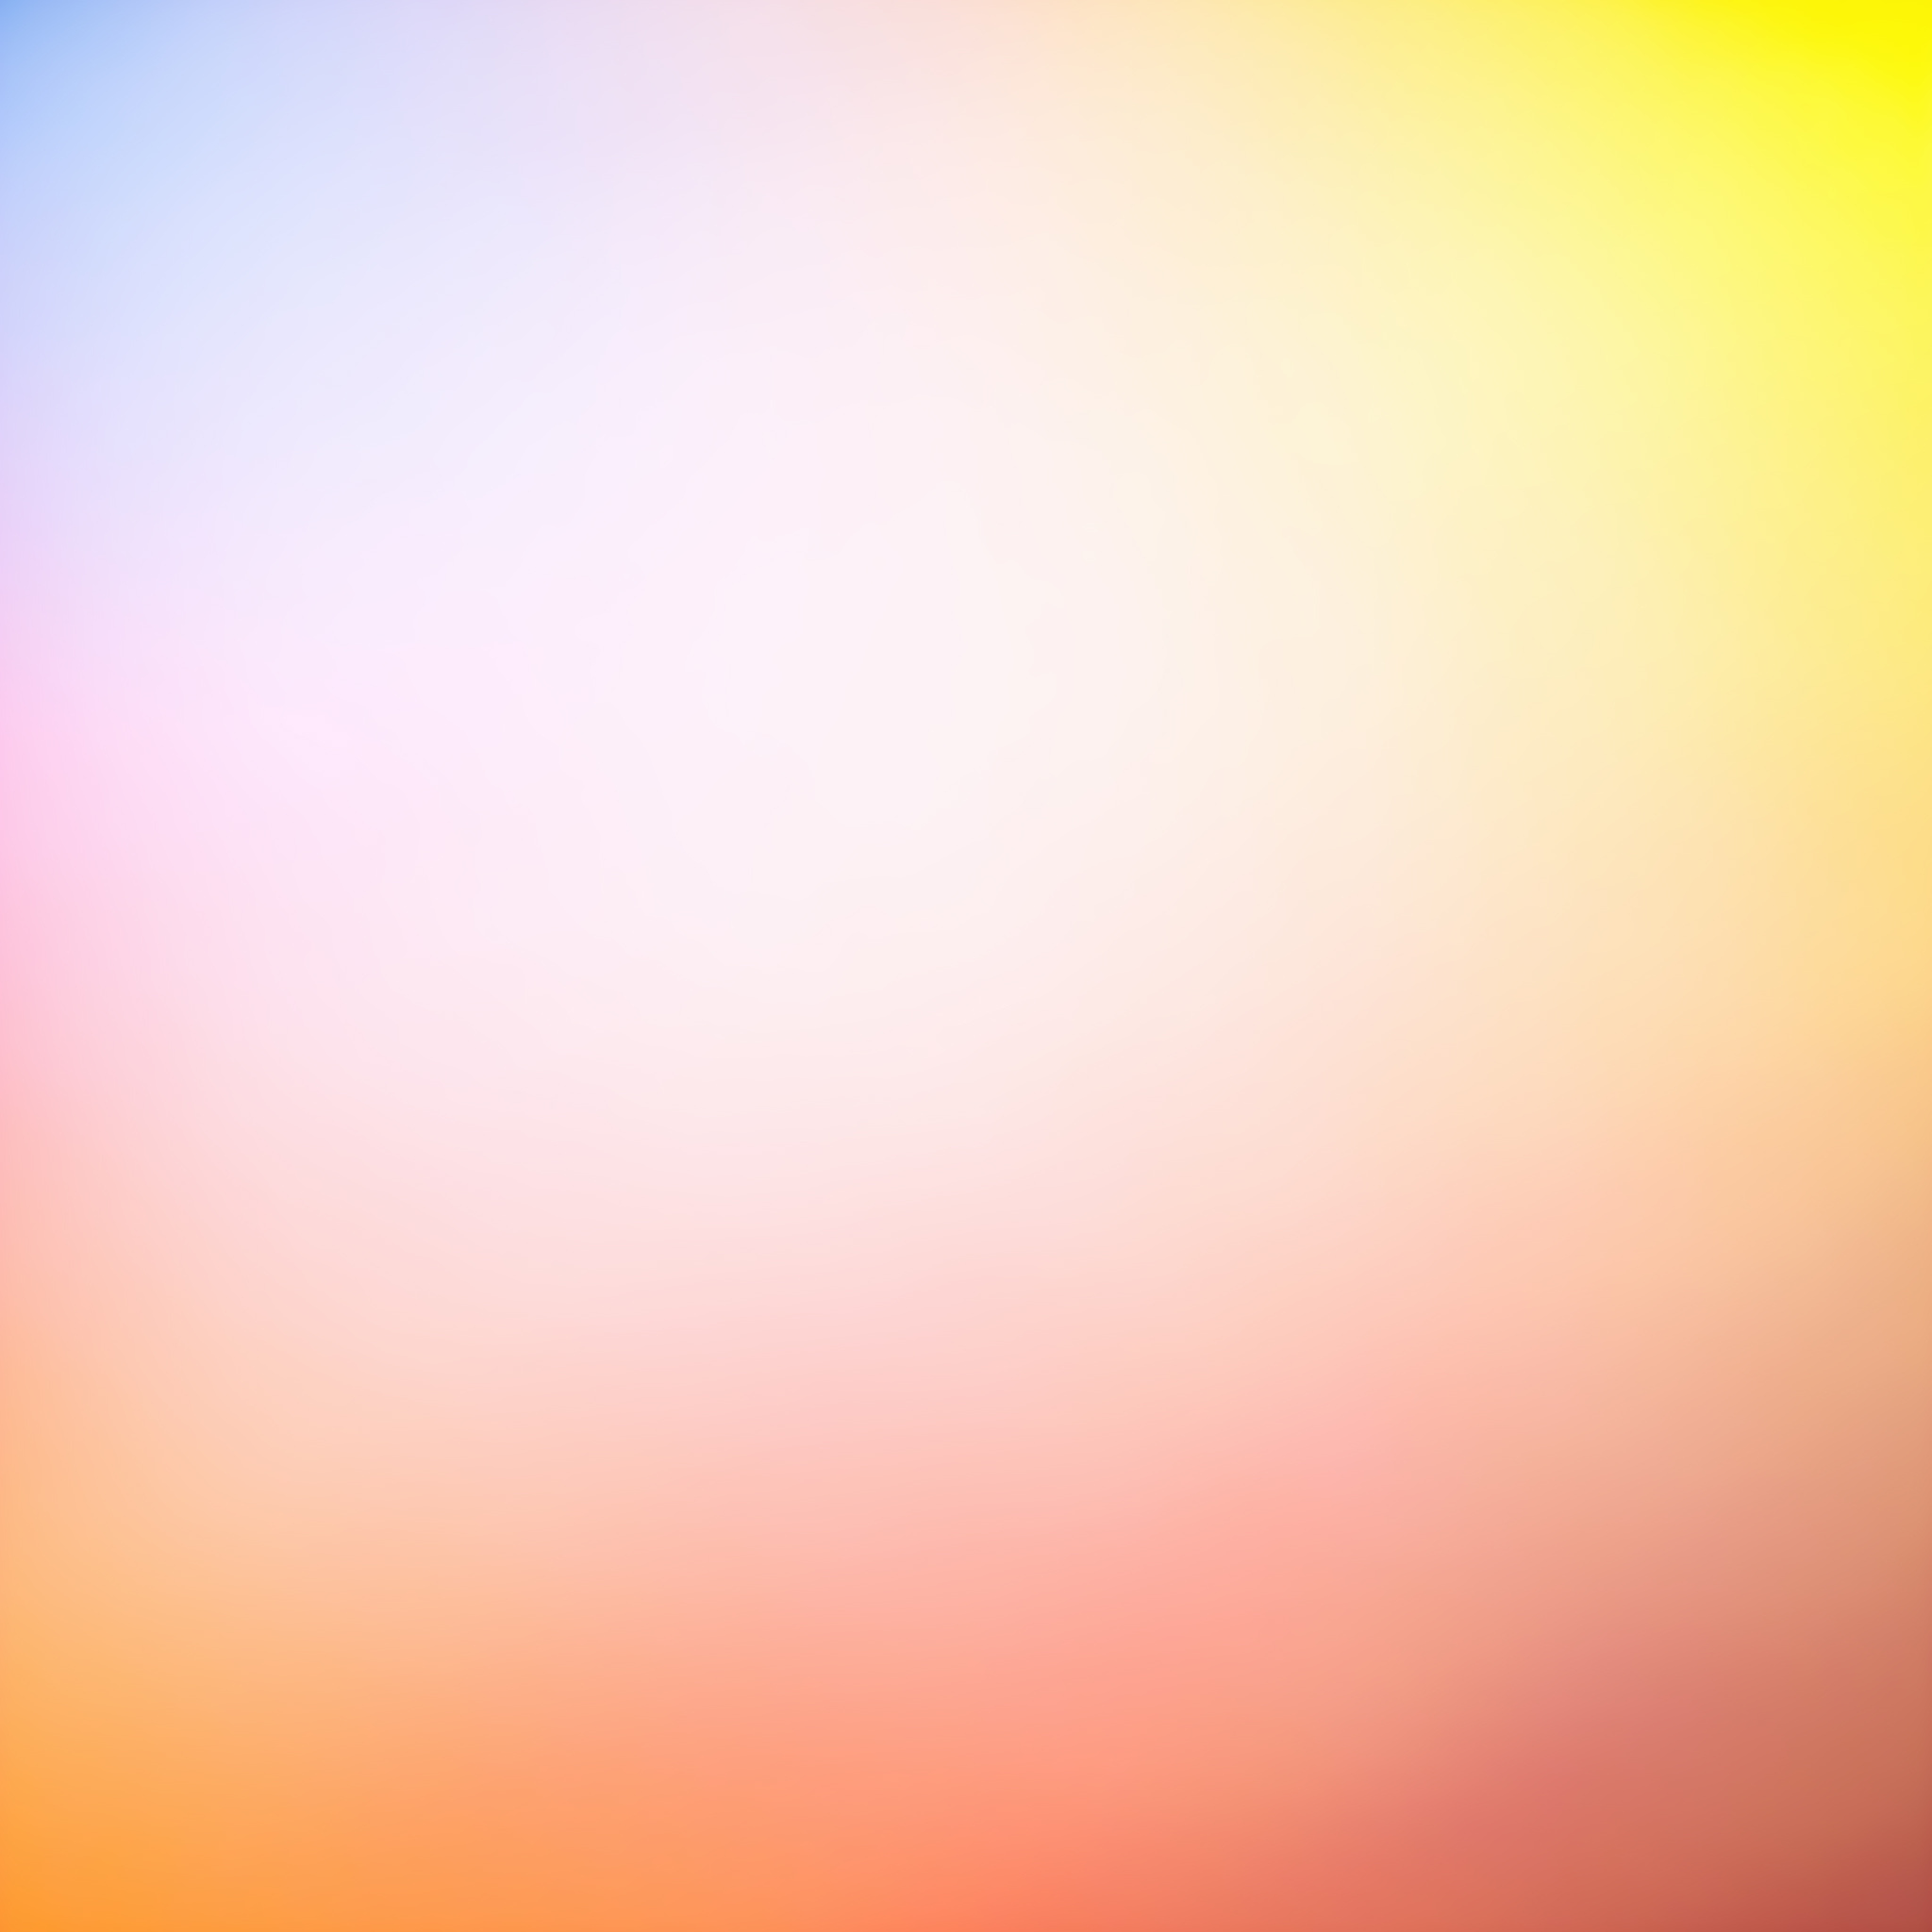 Simple Background iPad Air Wallpaper HD Retina